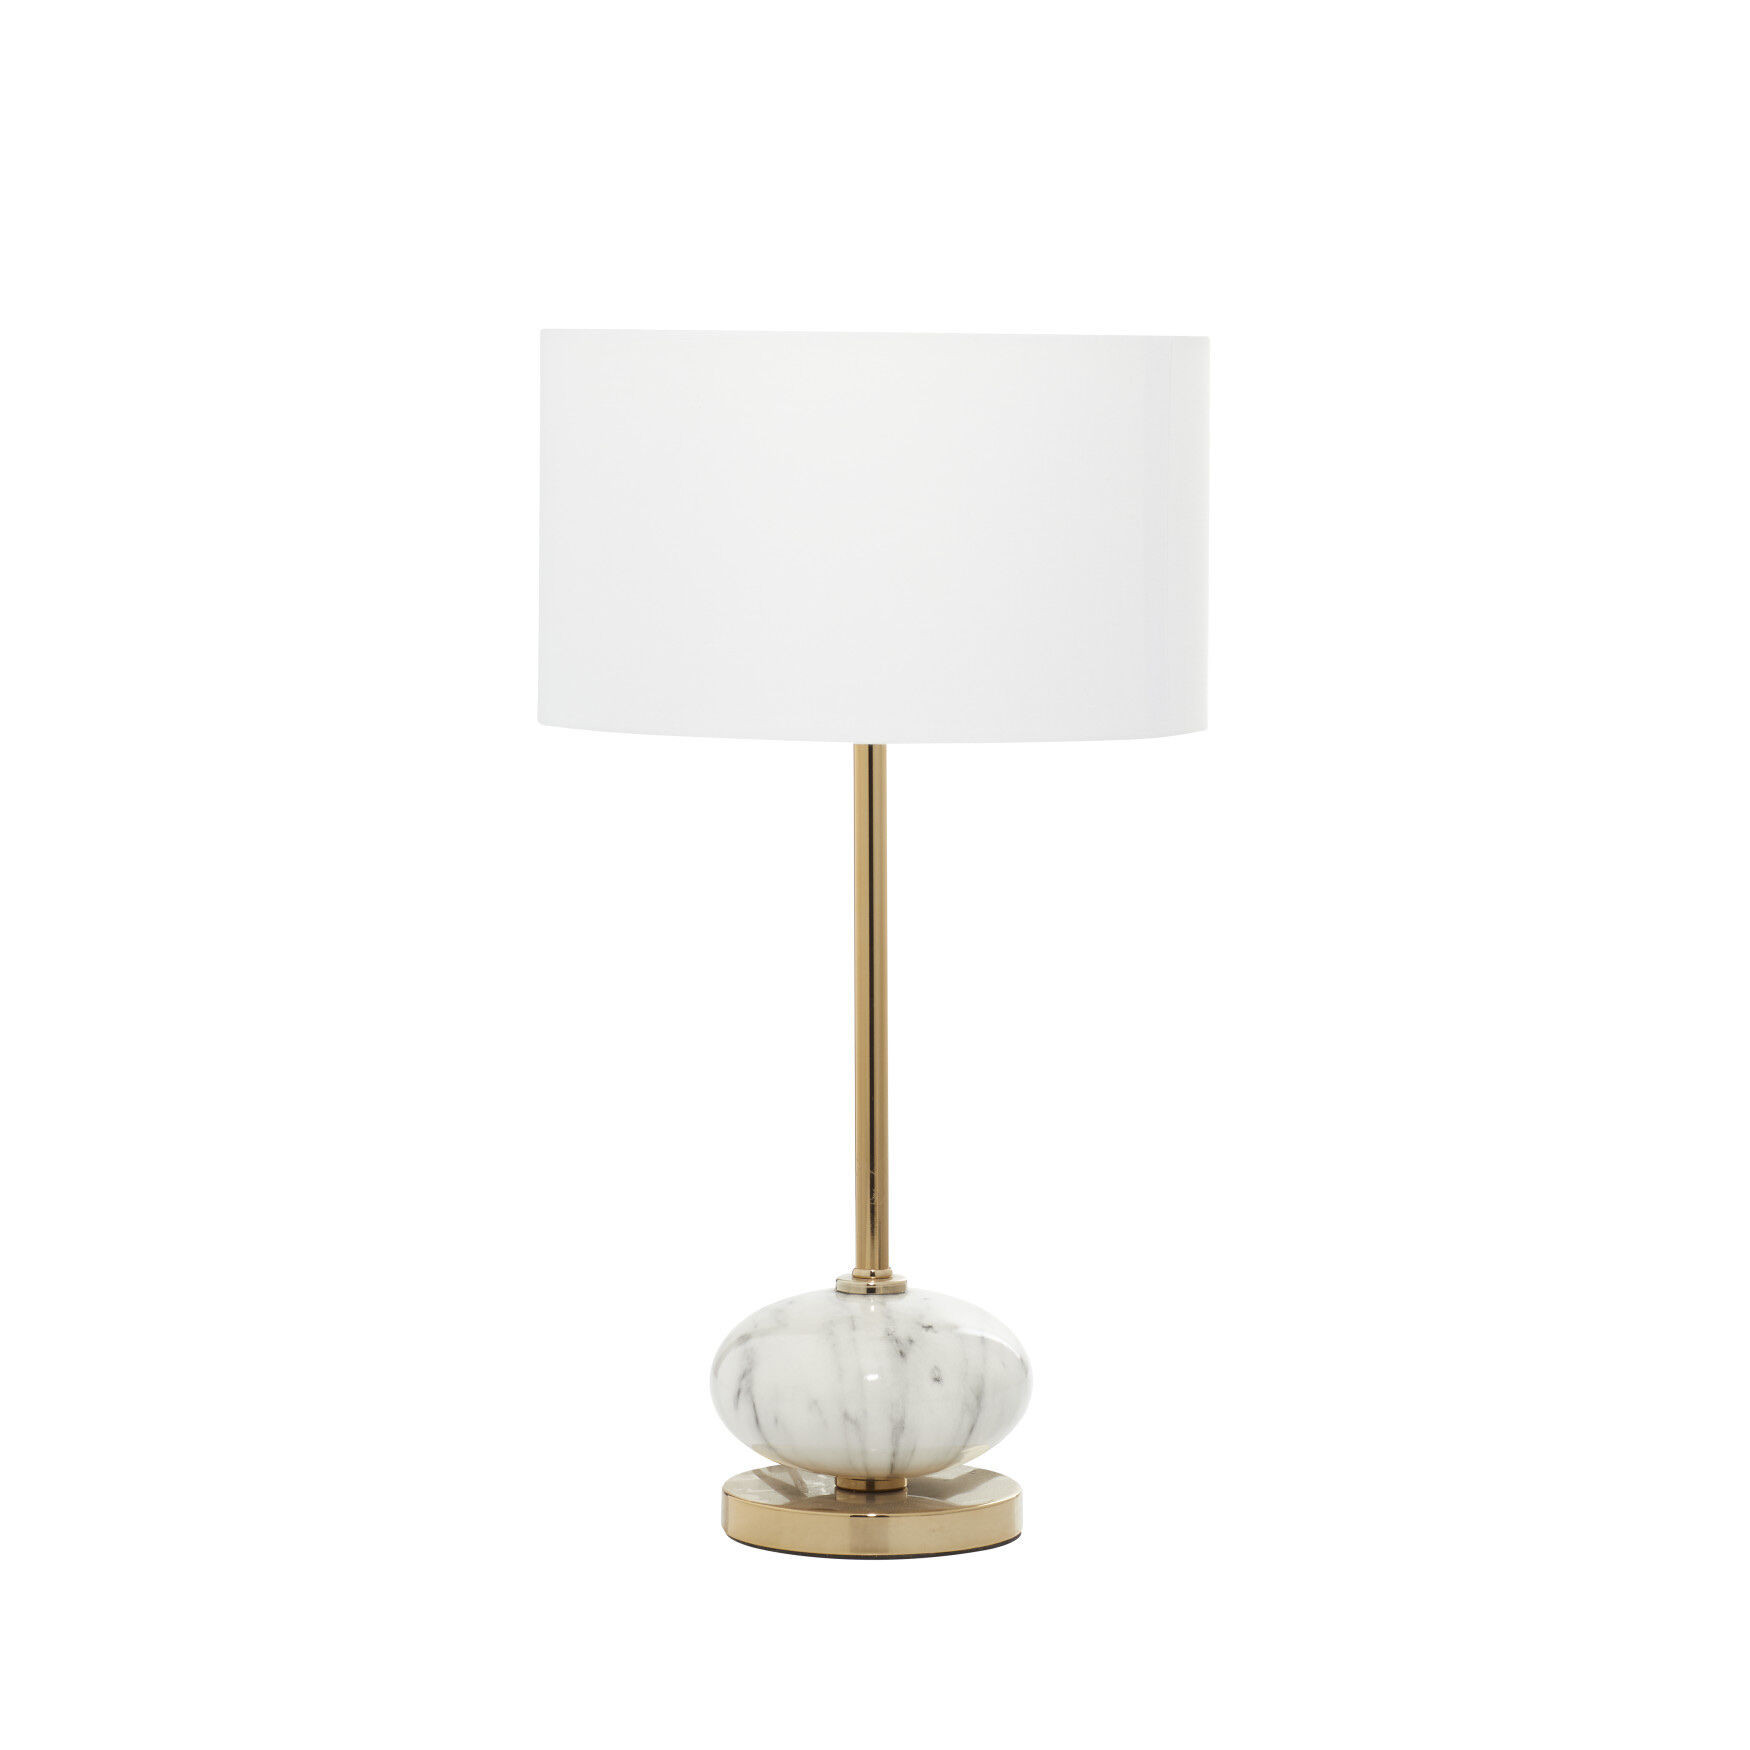 Quinn Living Gold Metal Glam Table Lamp